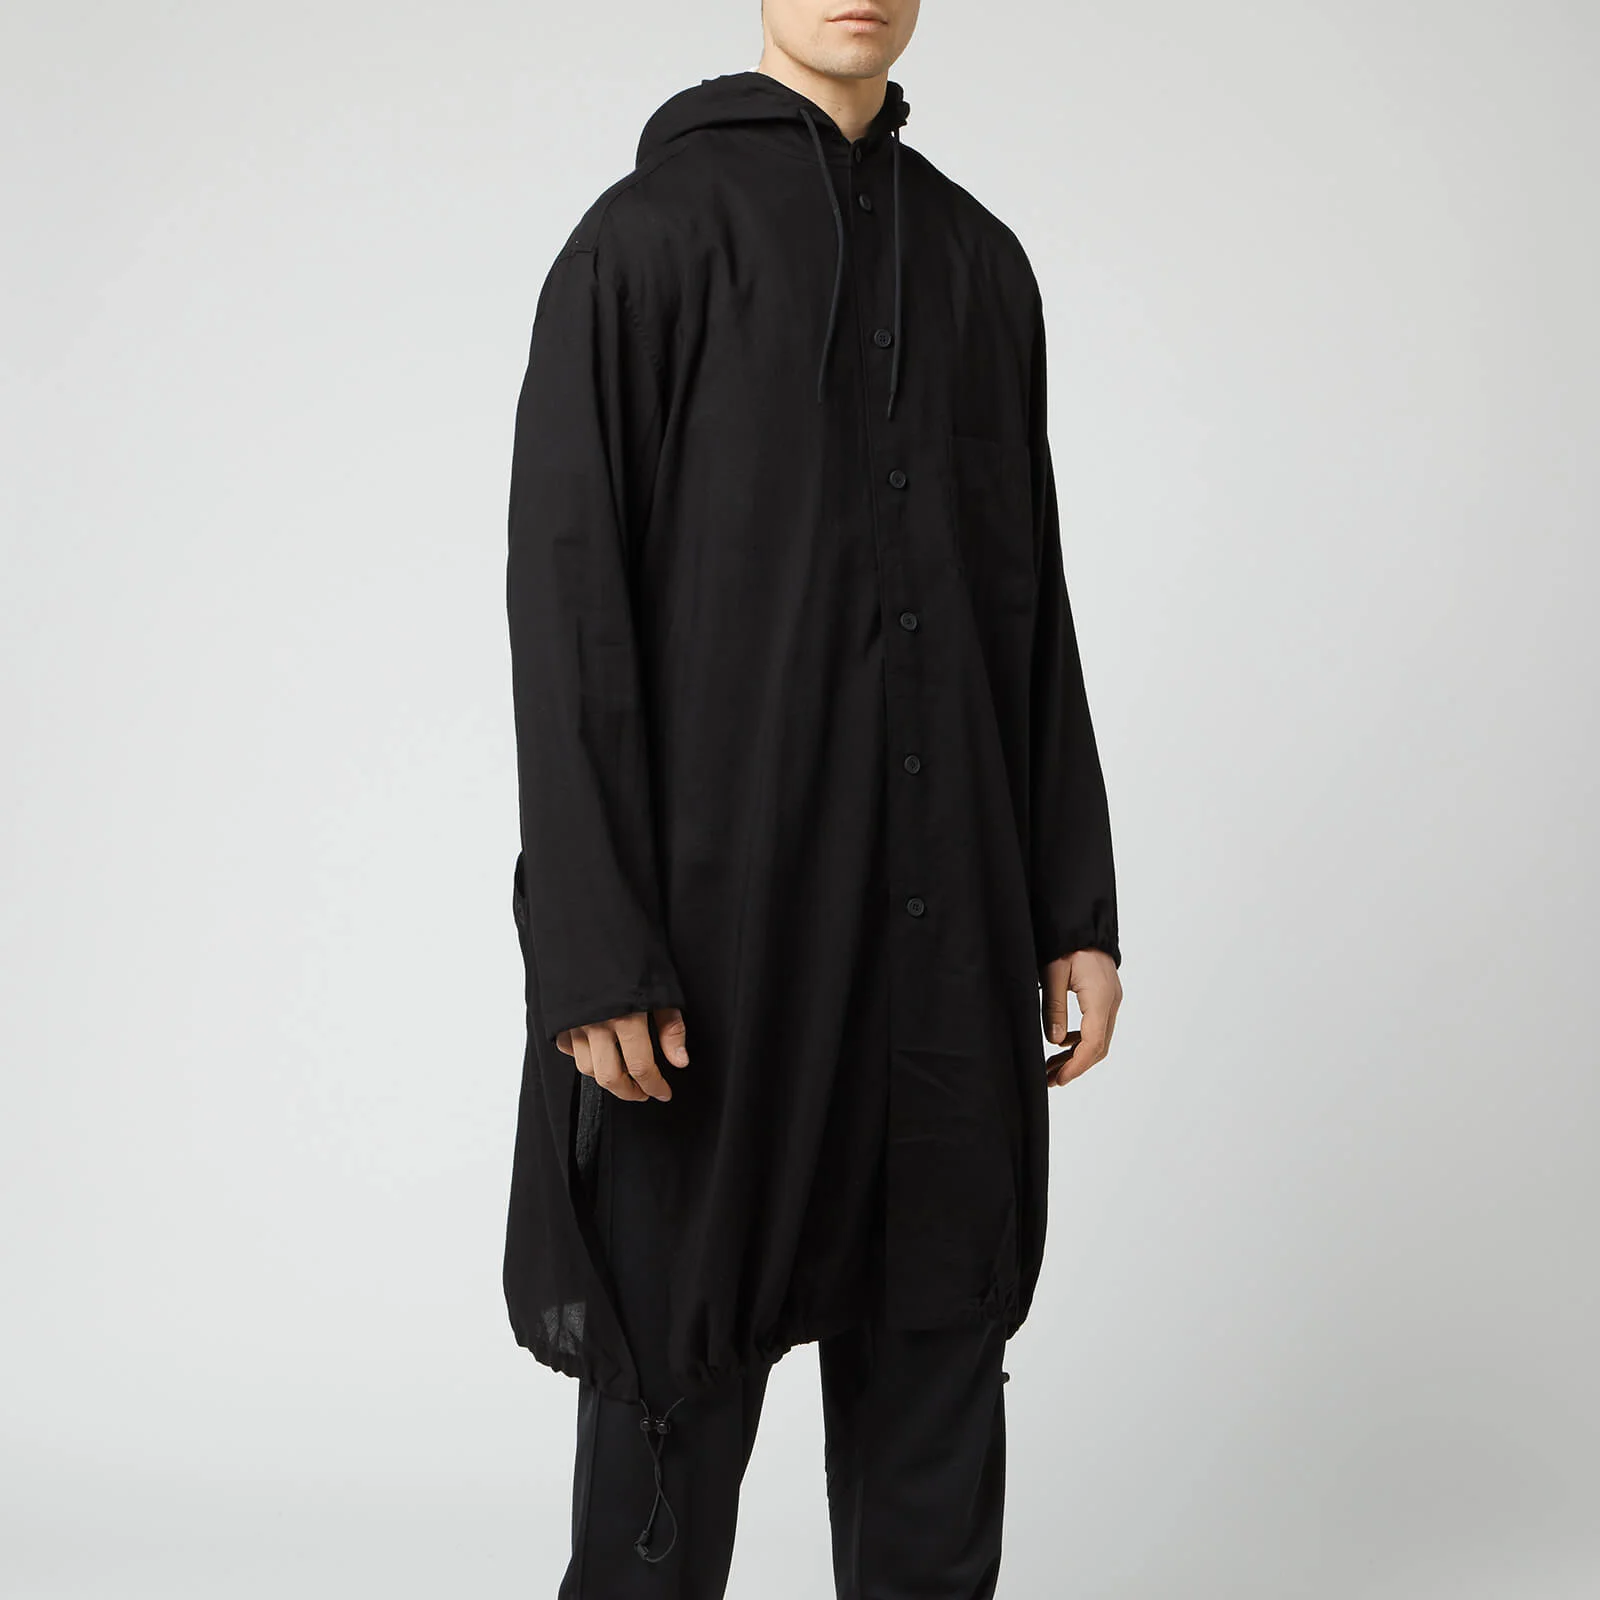 Y-3 Men's Tencel Cotton Hood Long Shirt Jacket - Black Image 1